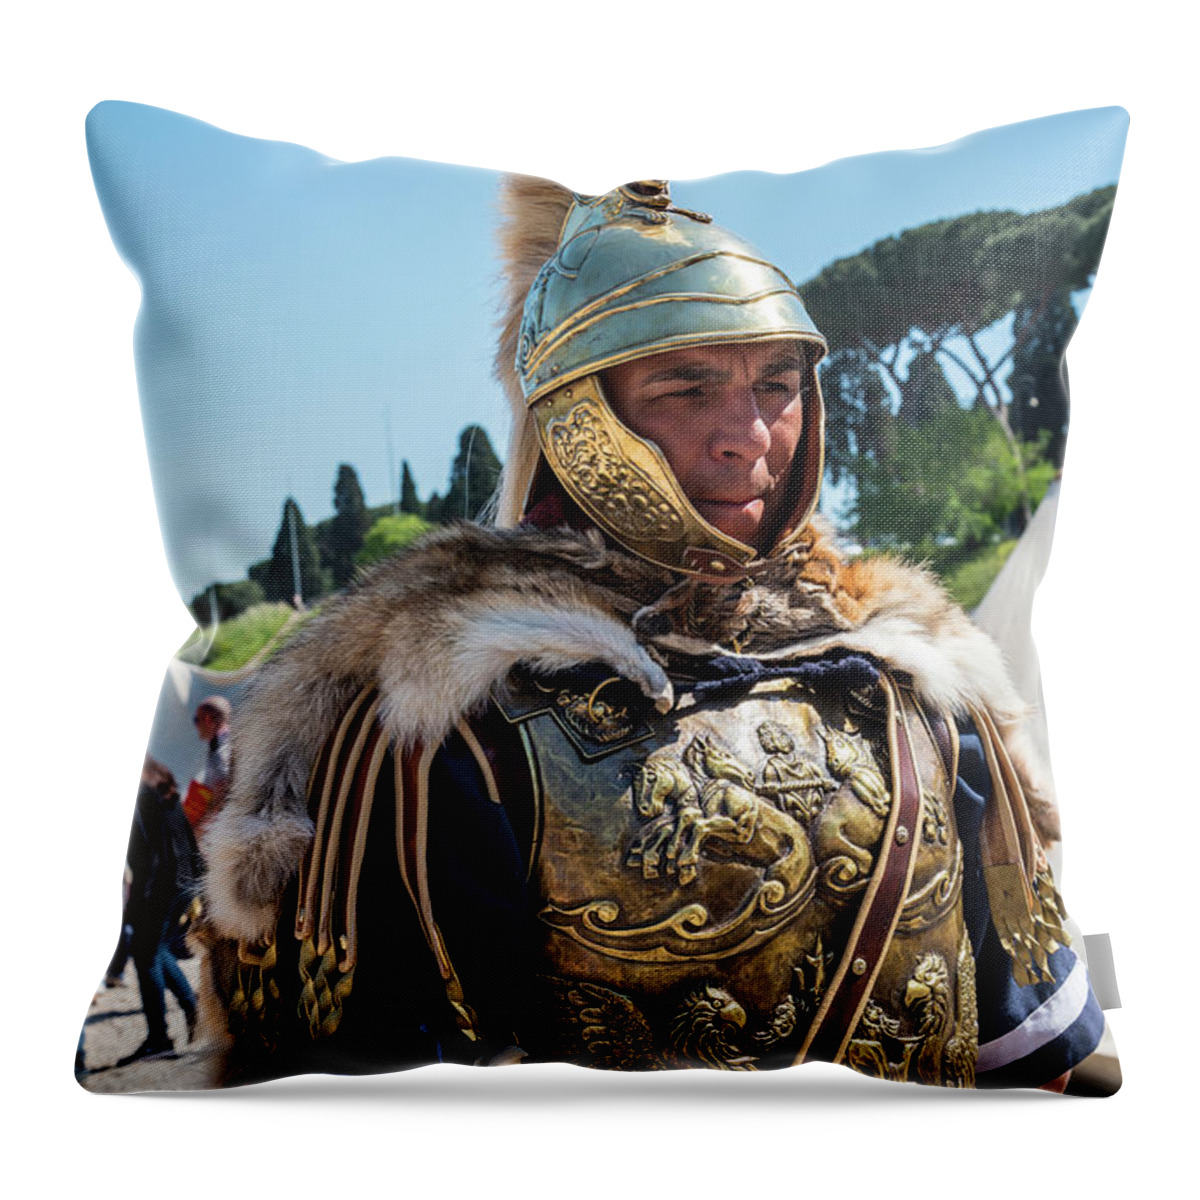 Roman Legion Pride Throw Pillow featuring the photograph Roman Legion Pride by Brenda Kean